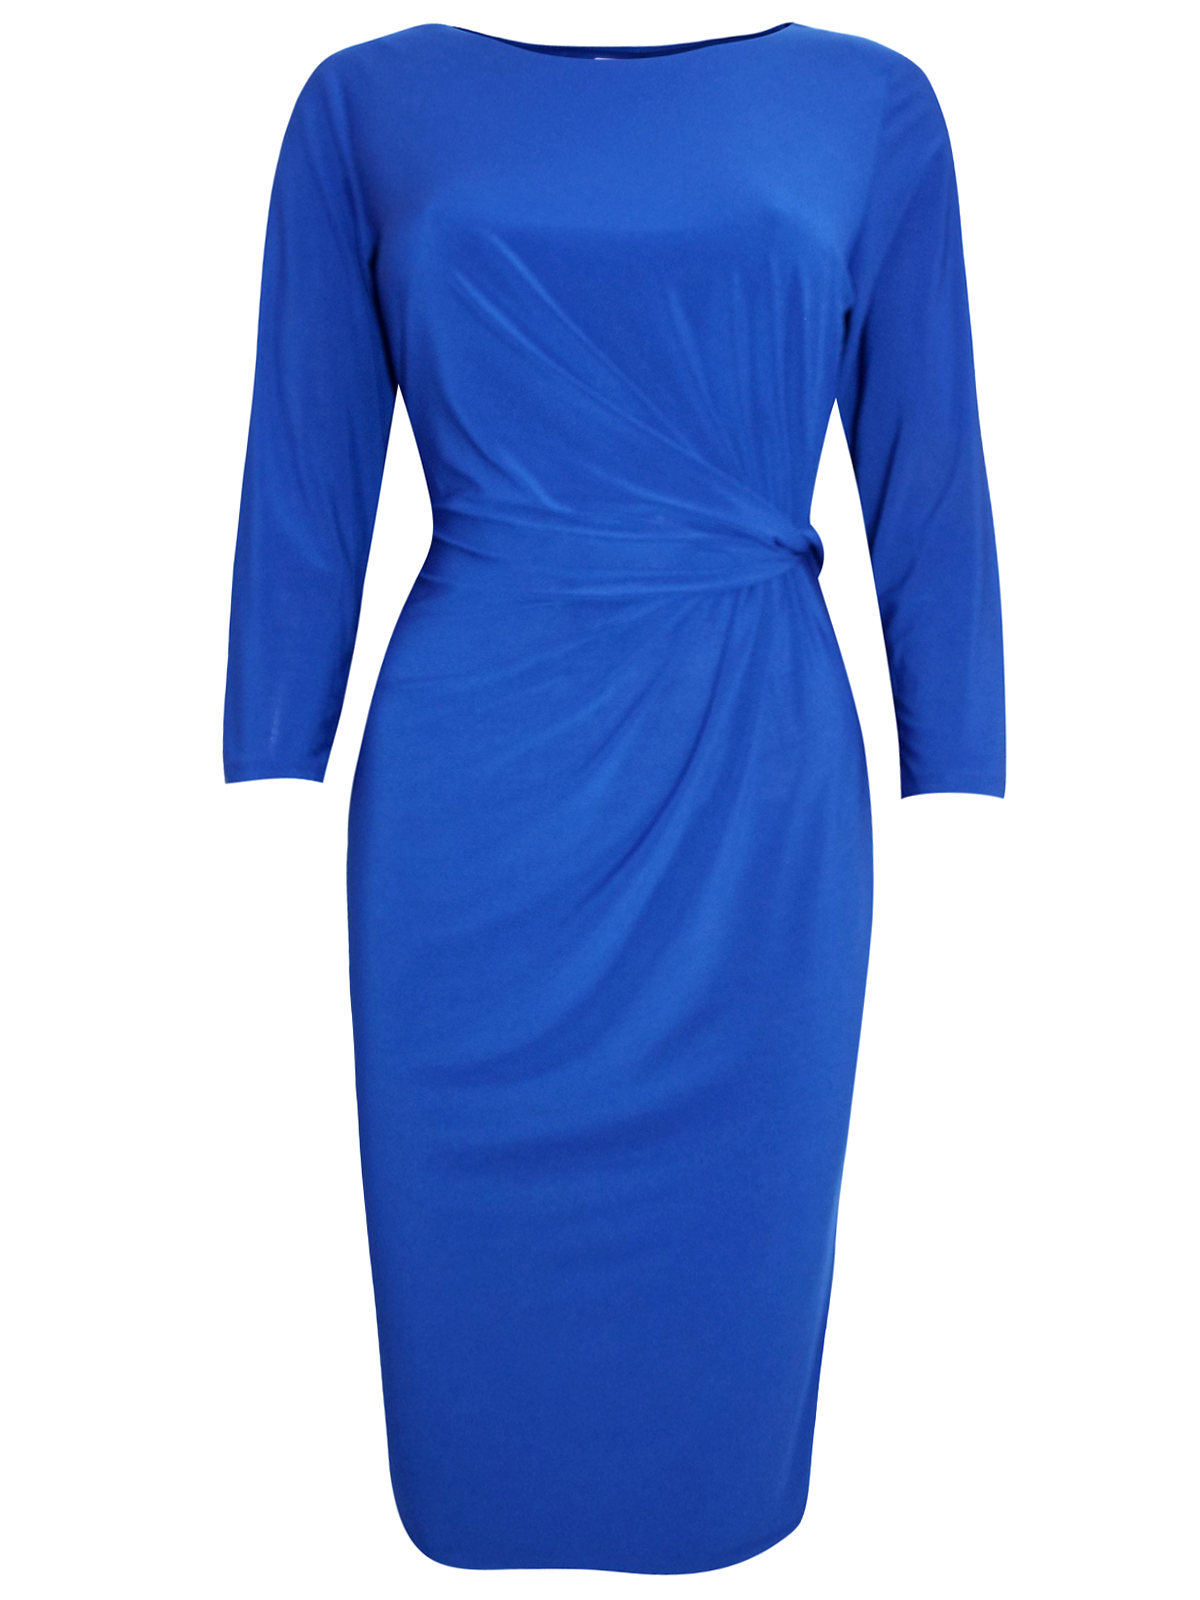 Debenhams - - D3benhams BLUE Knee Length Dress - Size 8 to 24